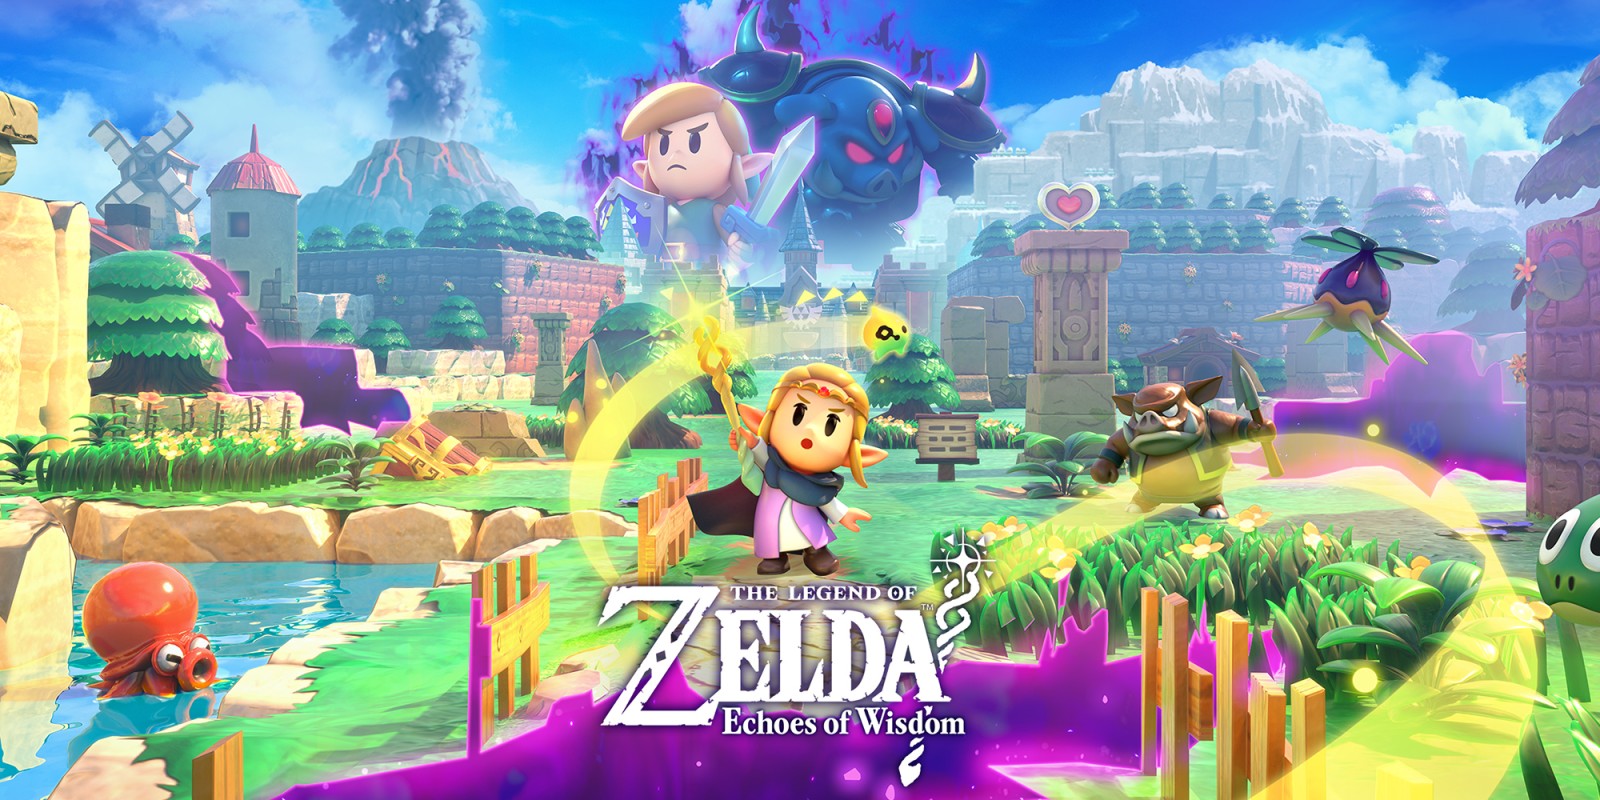 Nintendo Announces The Legend of Zelda: Echoes of Wisdom